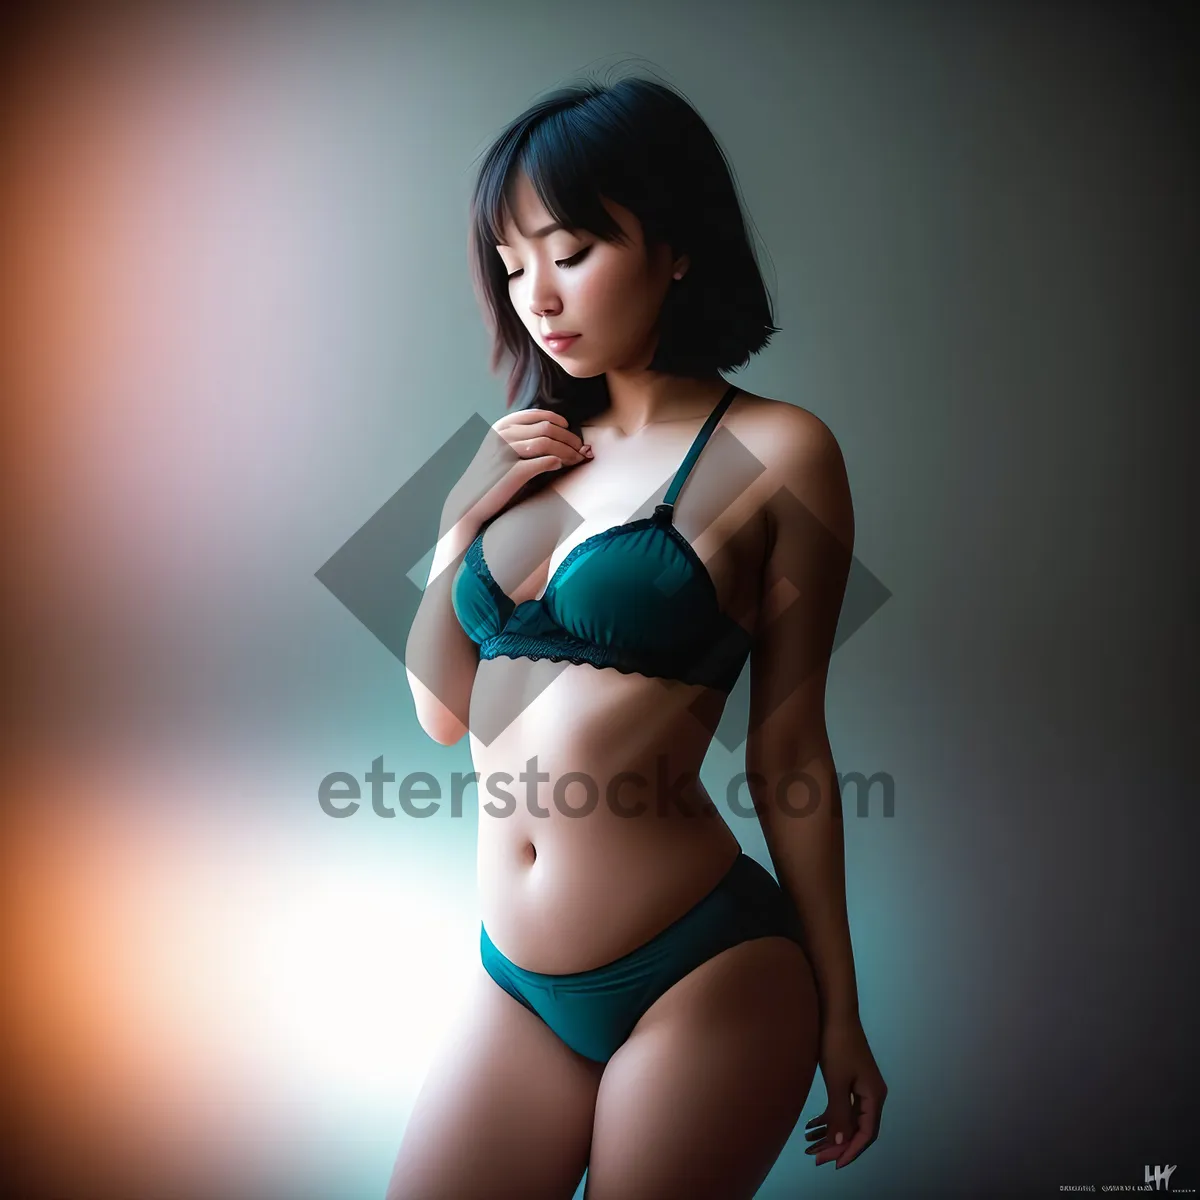 Picture of Seductive Bikini Model Poses with Sensual Elegance